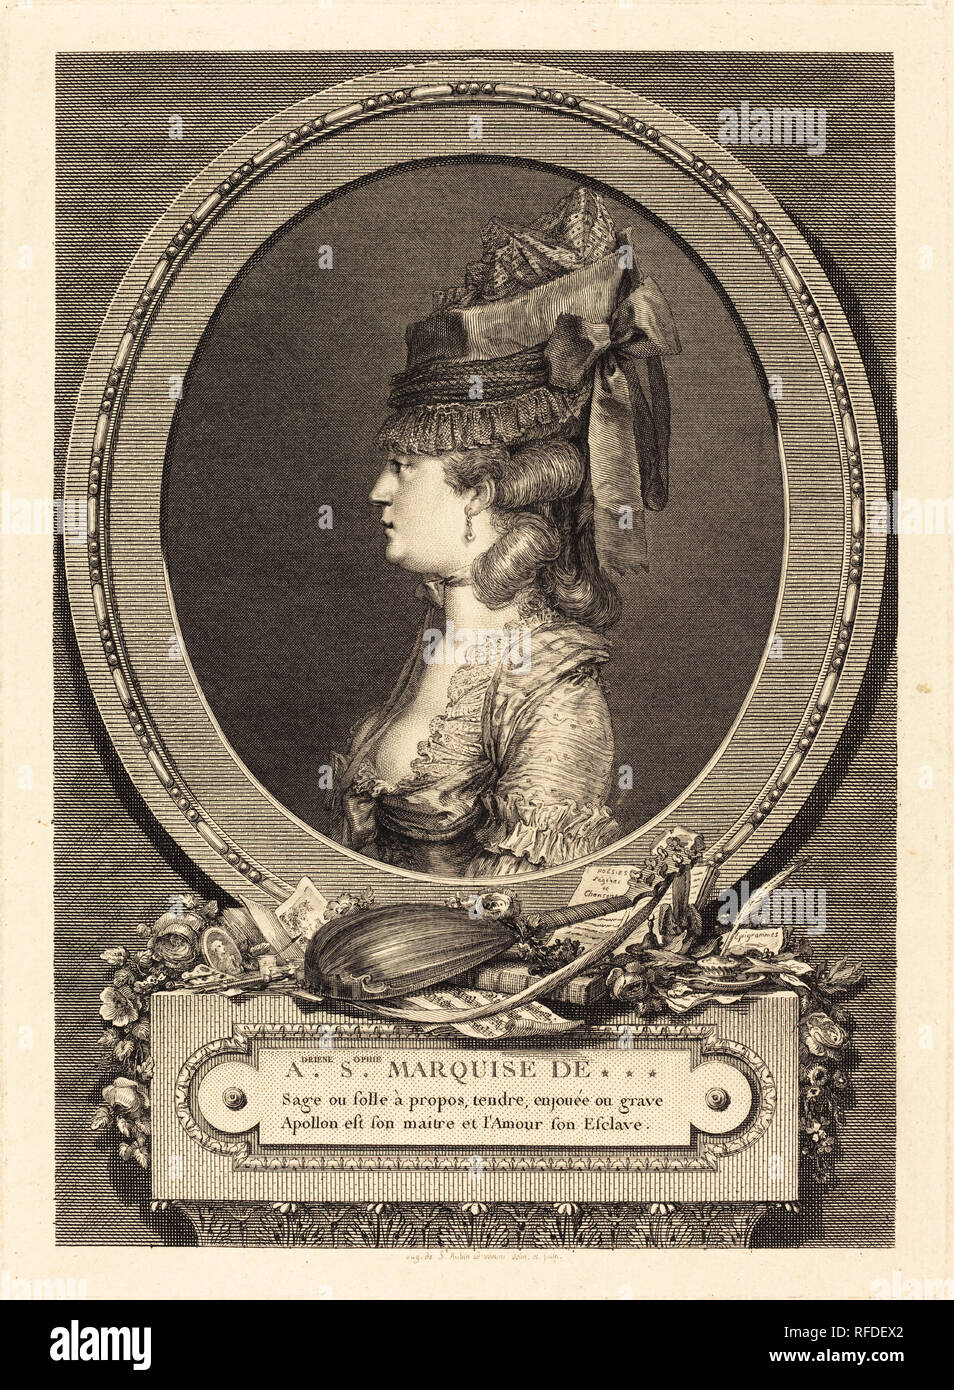 Adrienne Sophie Marquise de ***. Dated: 1779. Medium: etching and engraving. Museum: National Gallery of Art, Washington DC. Author: Augustin de Saint-Aubin. Stock Photo